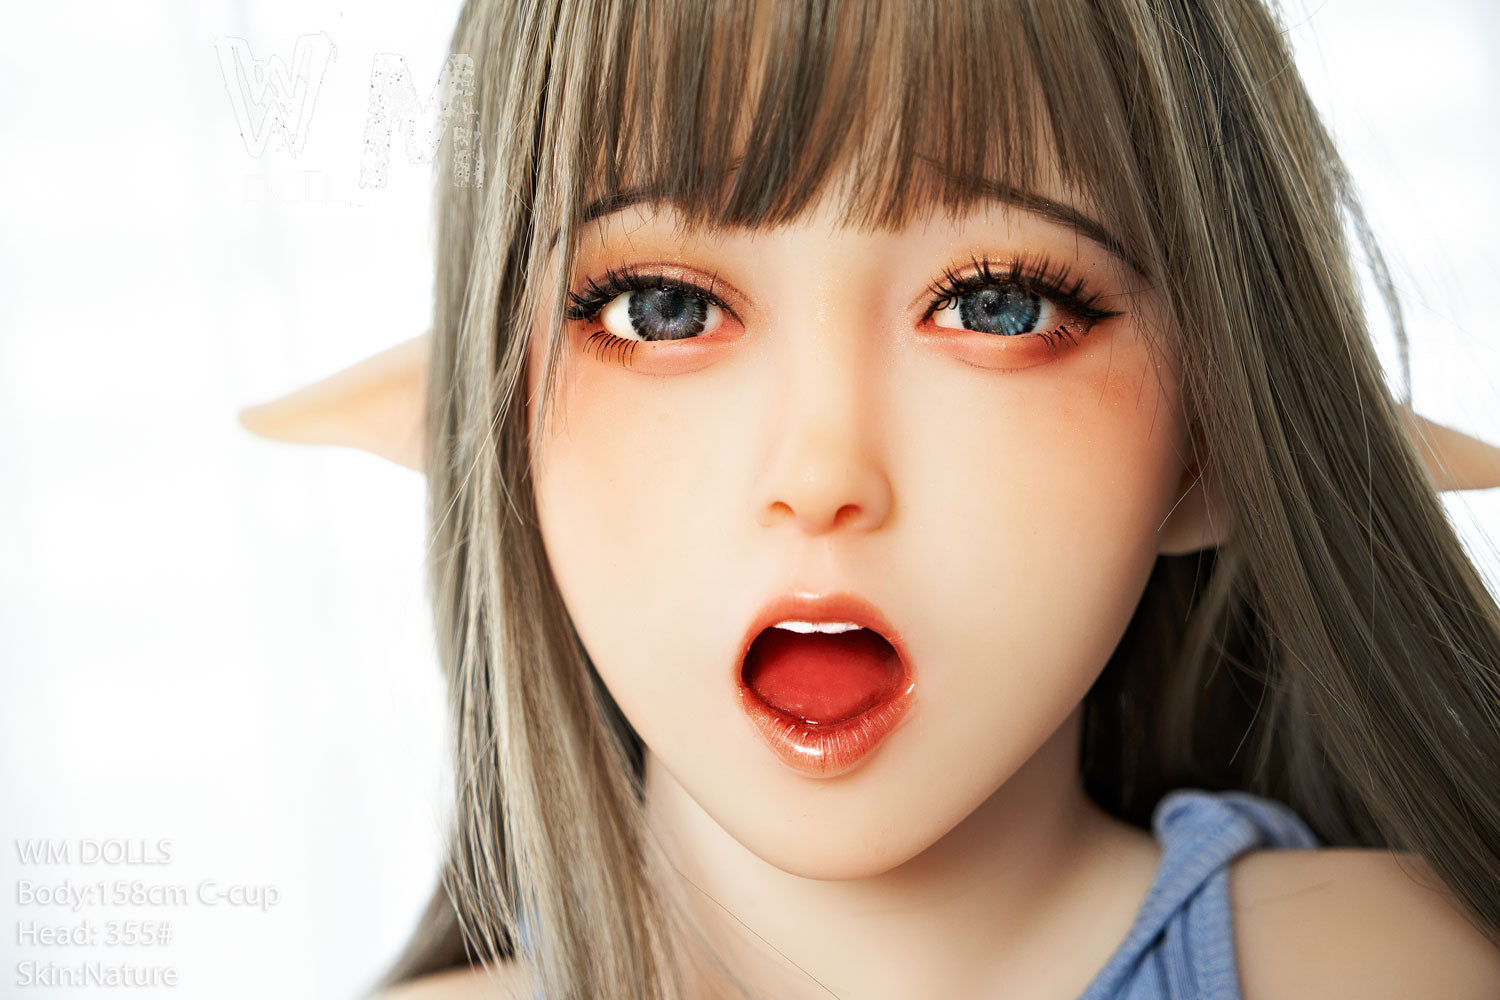 WM Doll 158 cm C TPE - Josie | Buy Sex Dolls at DOLLS ACTUALLY